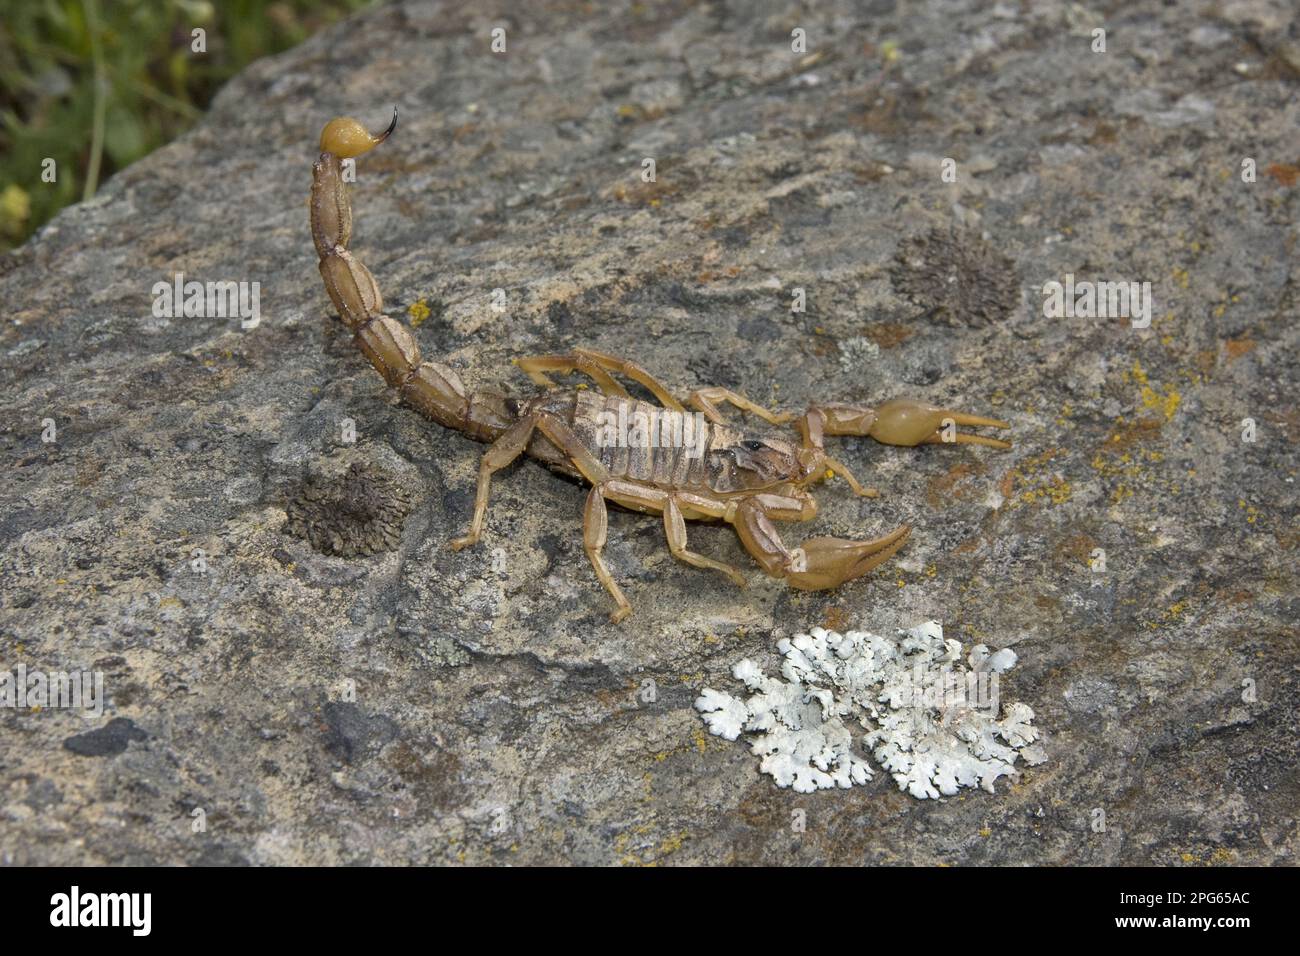 Common European Scorpion (Buthus occitanus) adult, with tail raised in threat posture, Extremadura, Spain Stock Photo